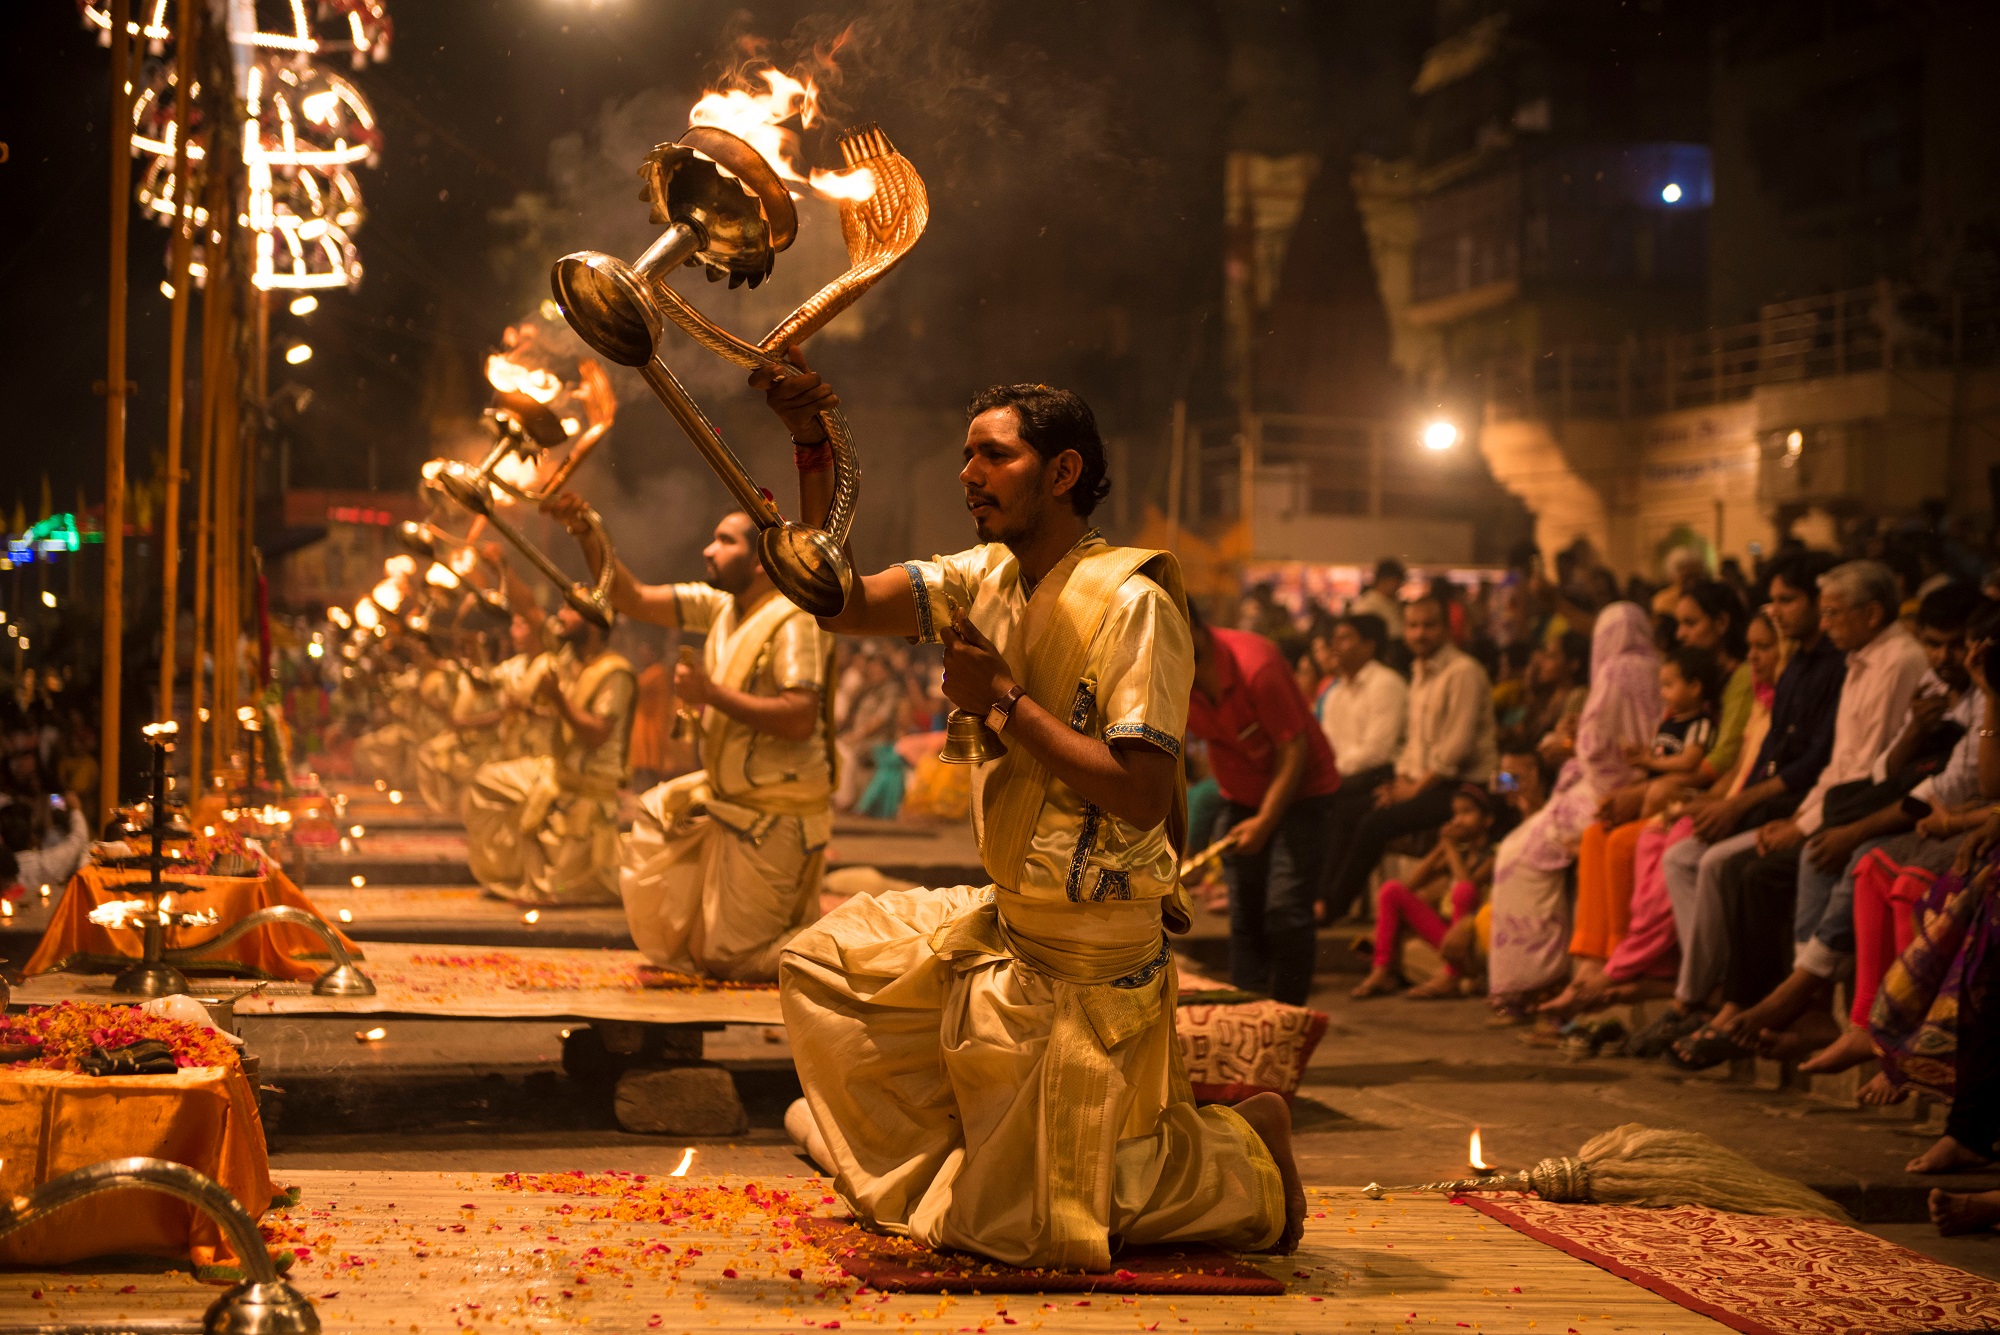 Ganga Aarti ceremony rituals performed by Hindu priests at Dashashwamedh Ghat in Varanasi.